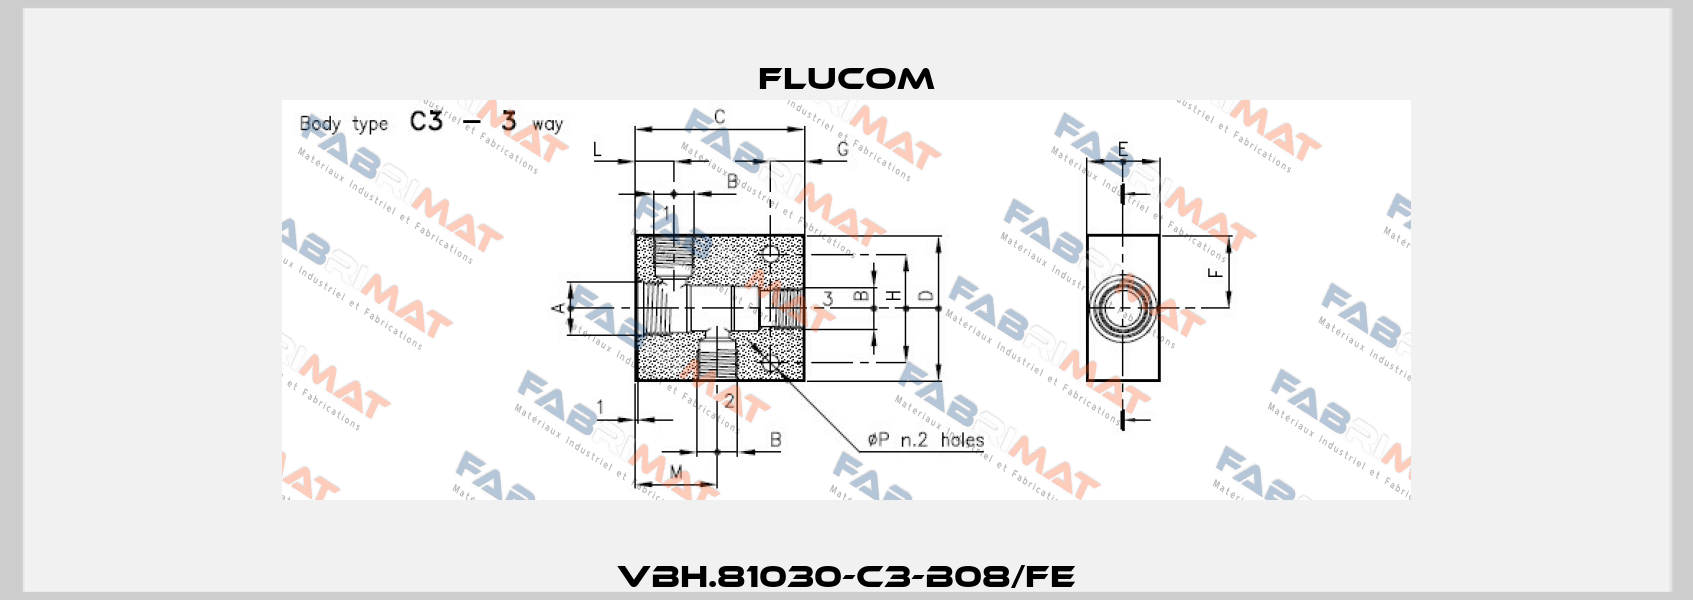 VBH.81030-C3-B08/FE Flucom